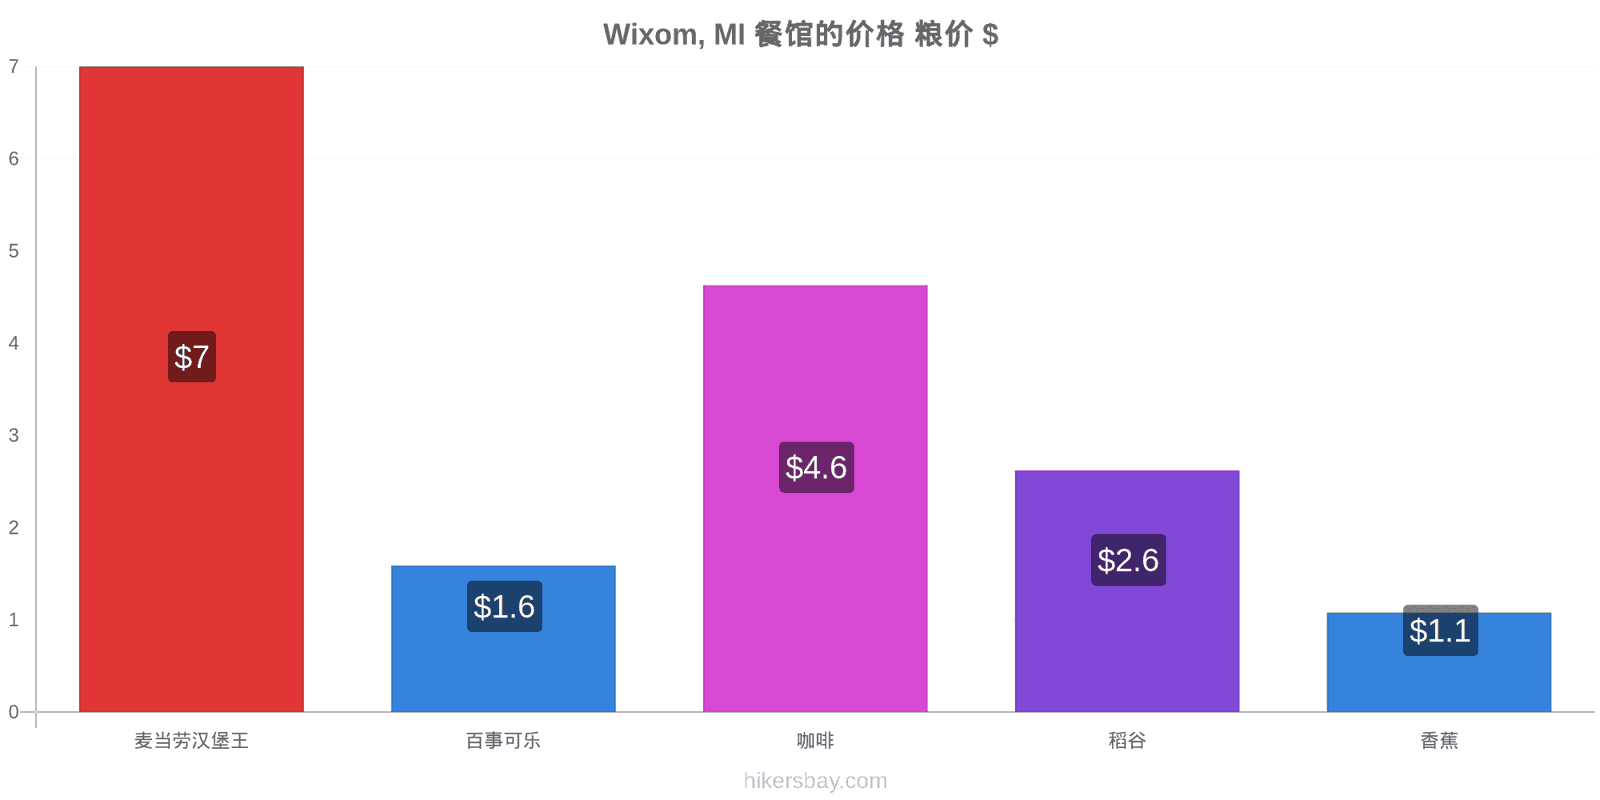 Wixom, MI 价格变动 hikersbay.com